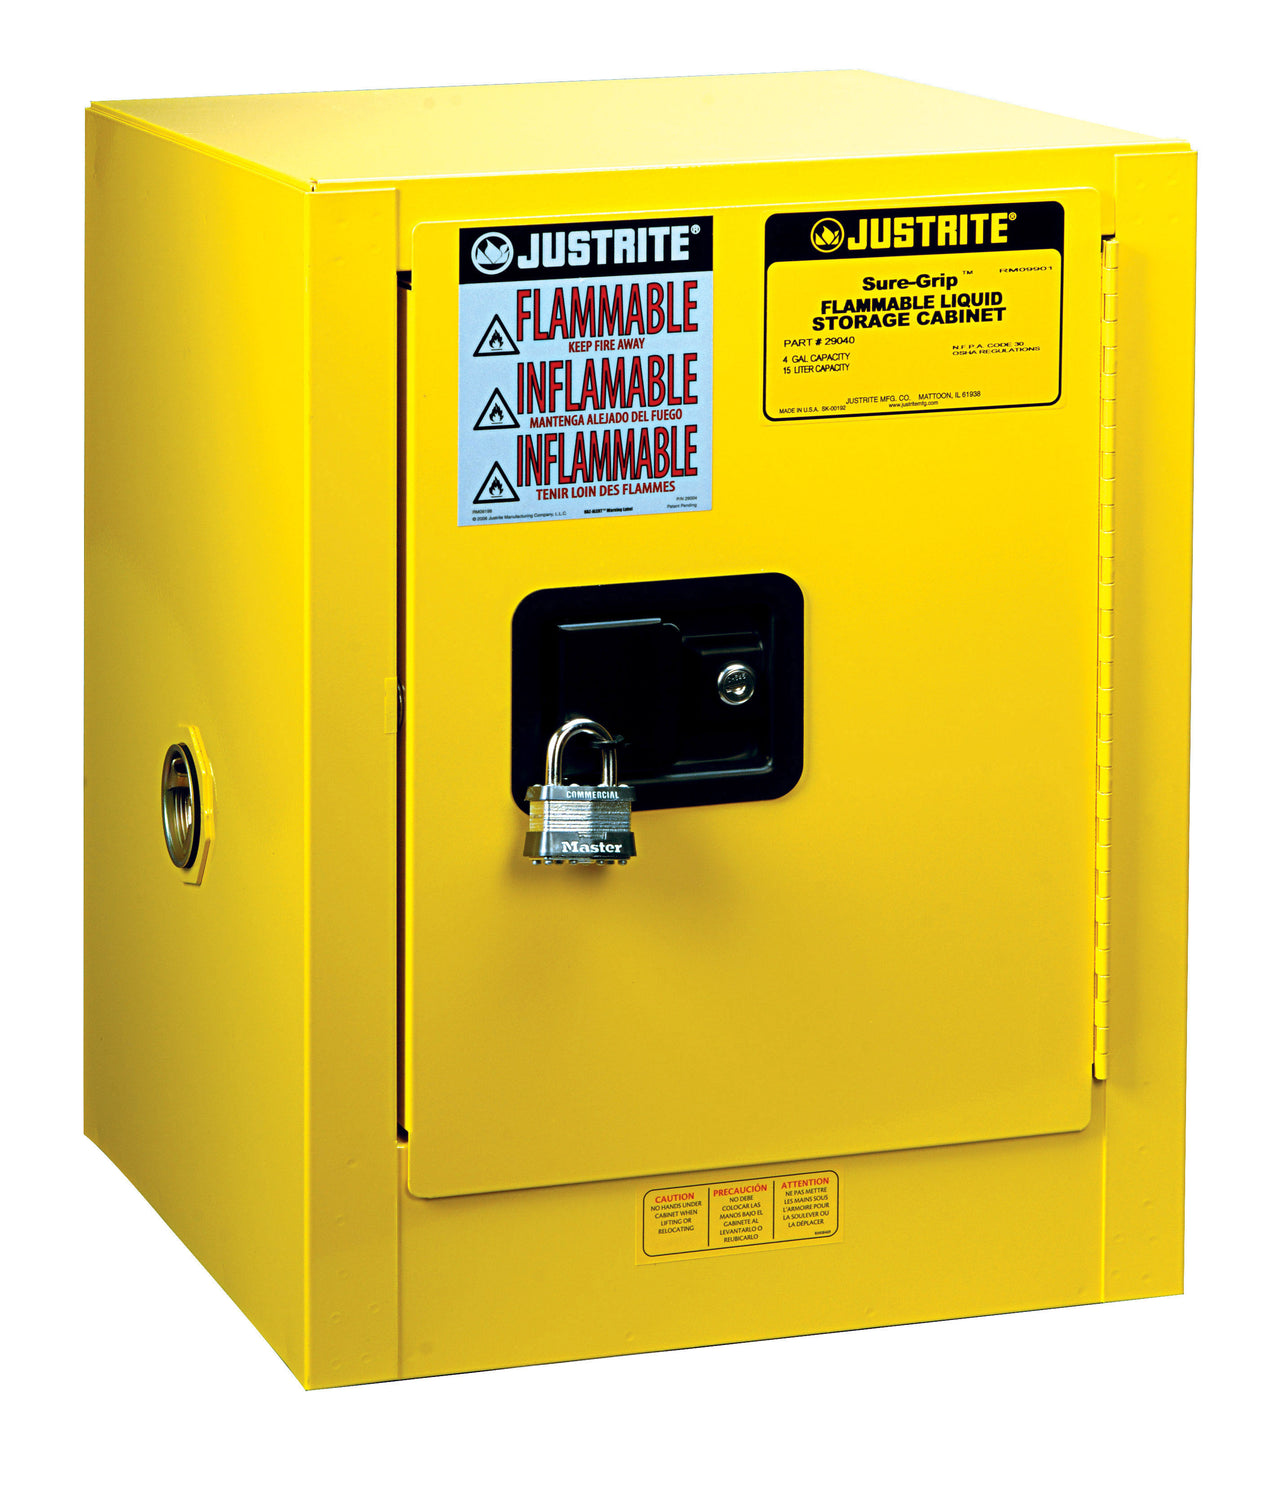 Justrite EX 4-Gallon Manual Close Safety Storage Cabinet